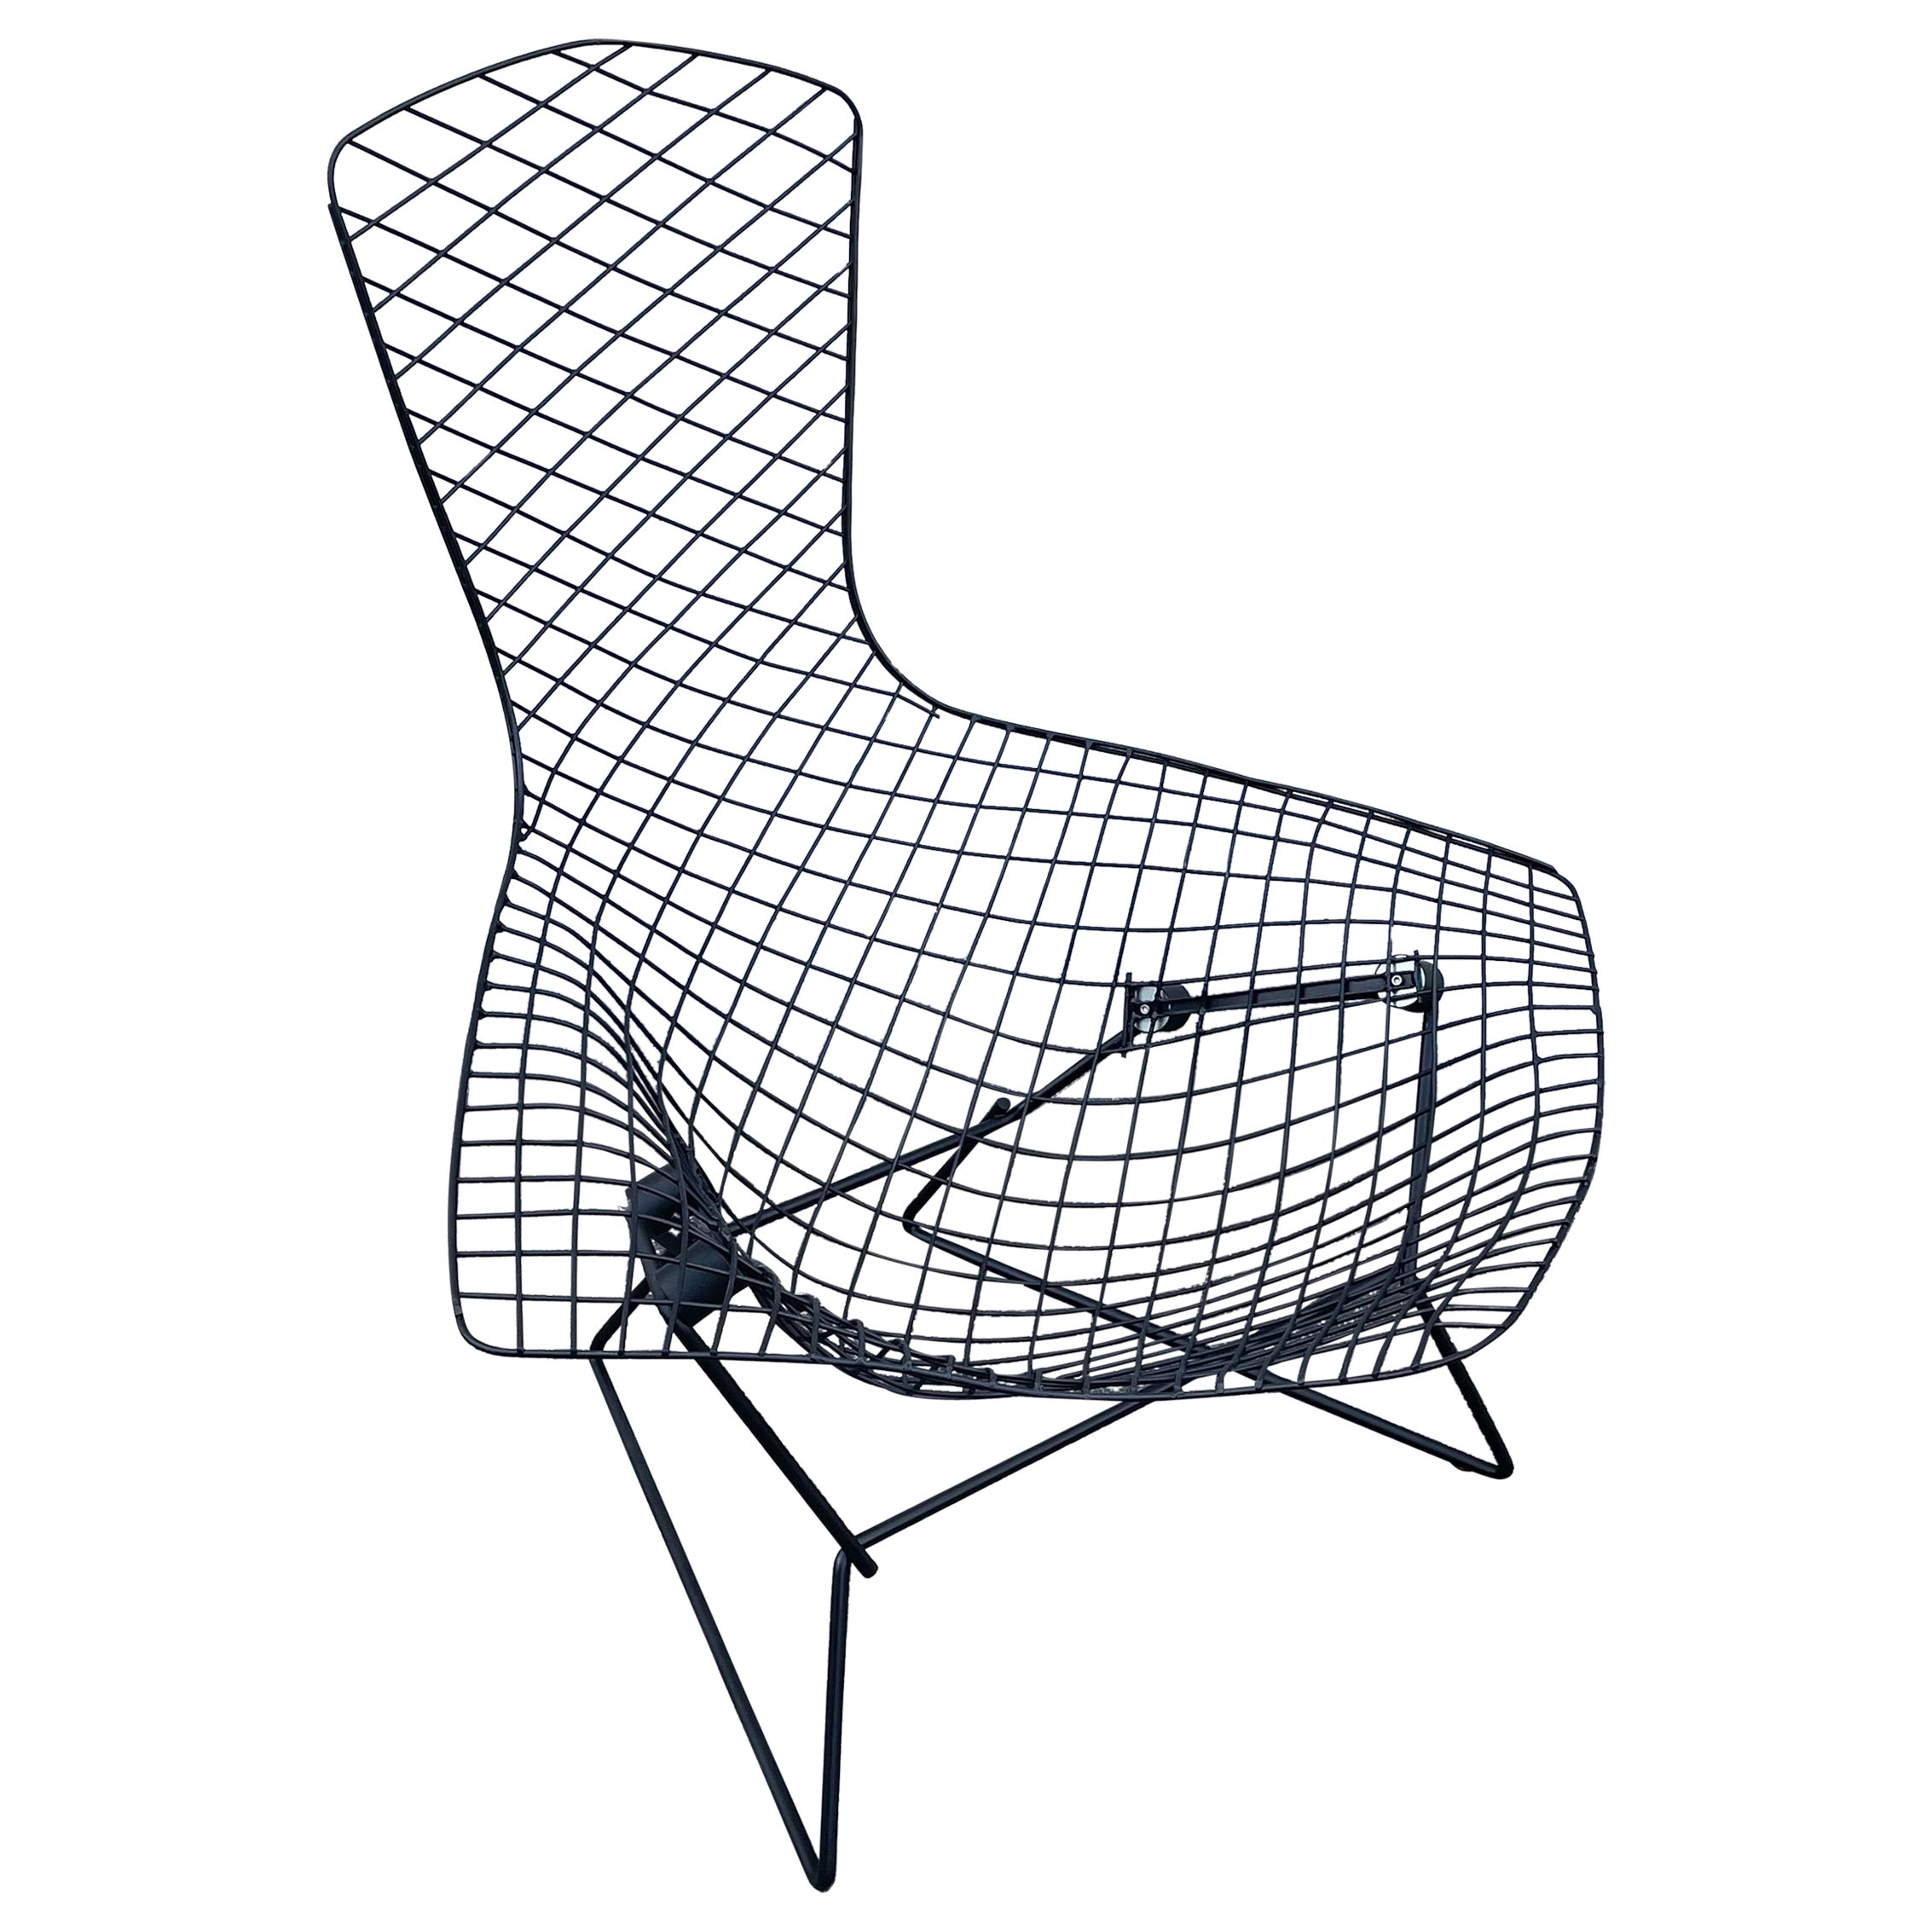 How do I identify a Bertoia chair?